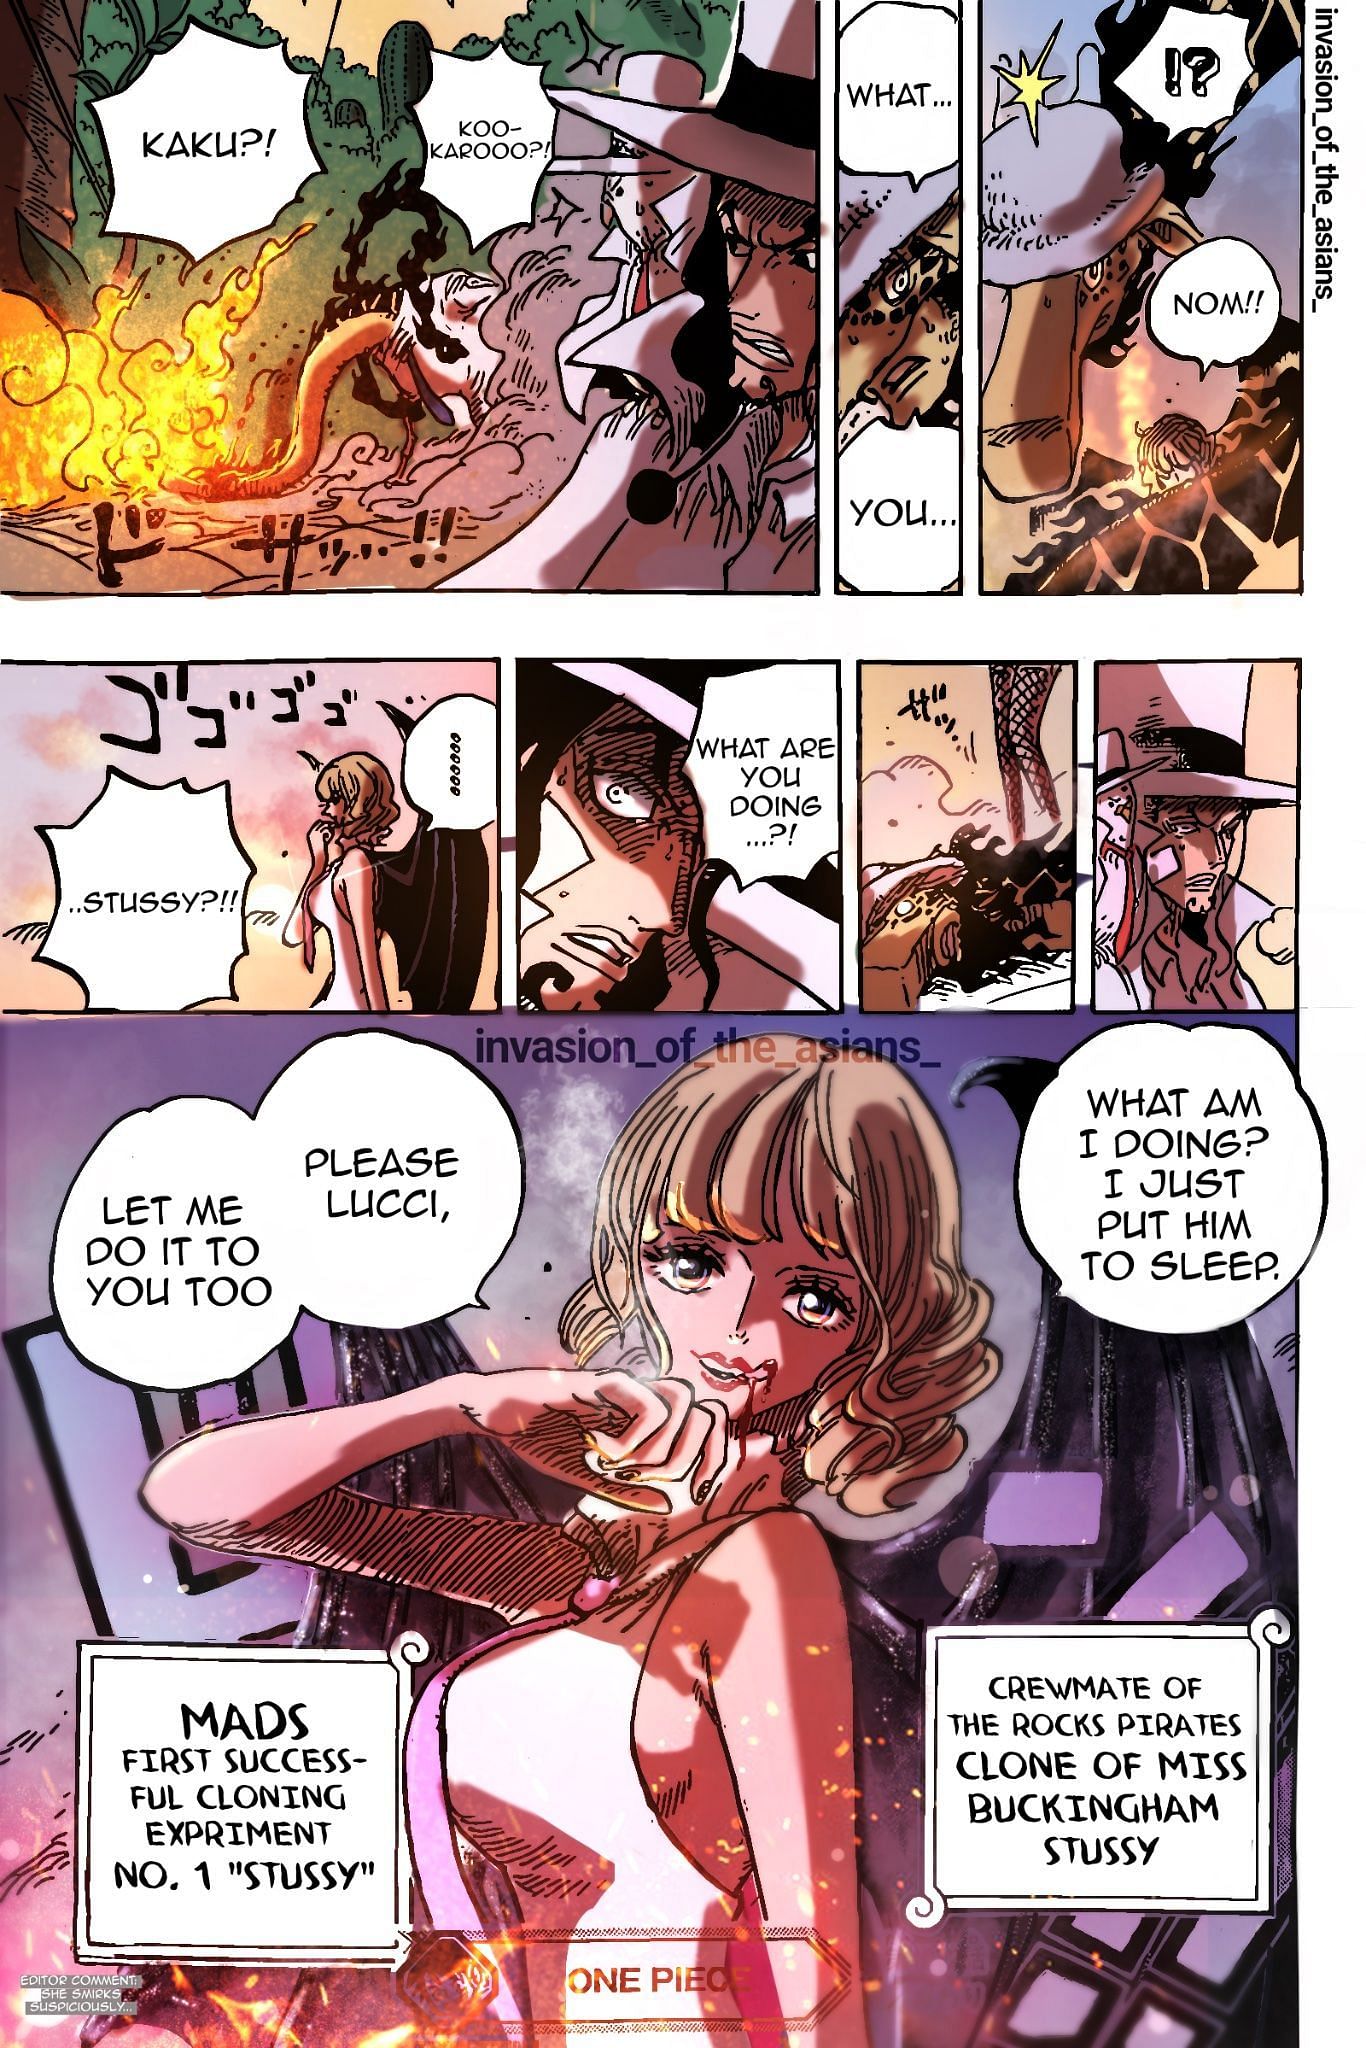 One Piece chapter 1072 leaked panel (Image via Eiichiro Oda)